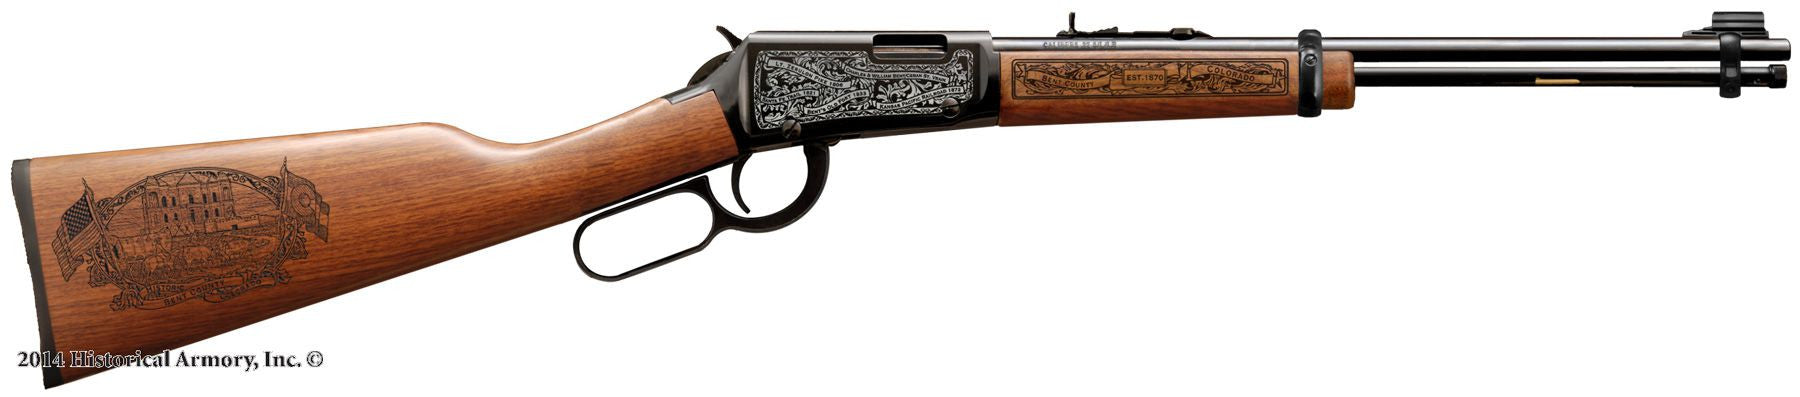 Bent-county-colorado-engraved-rifle-H001